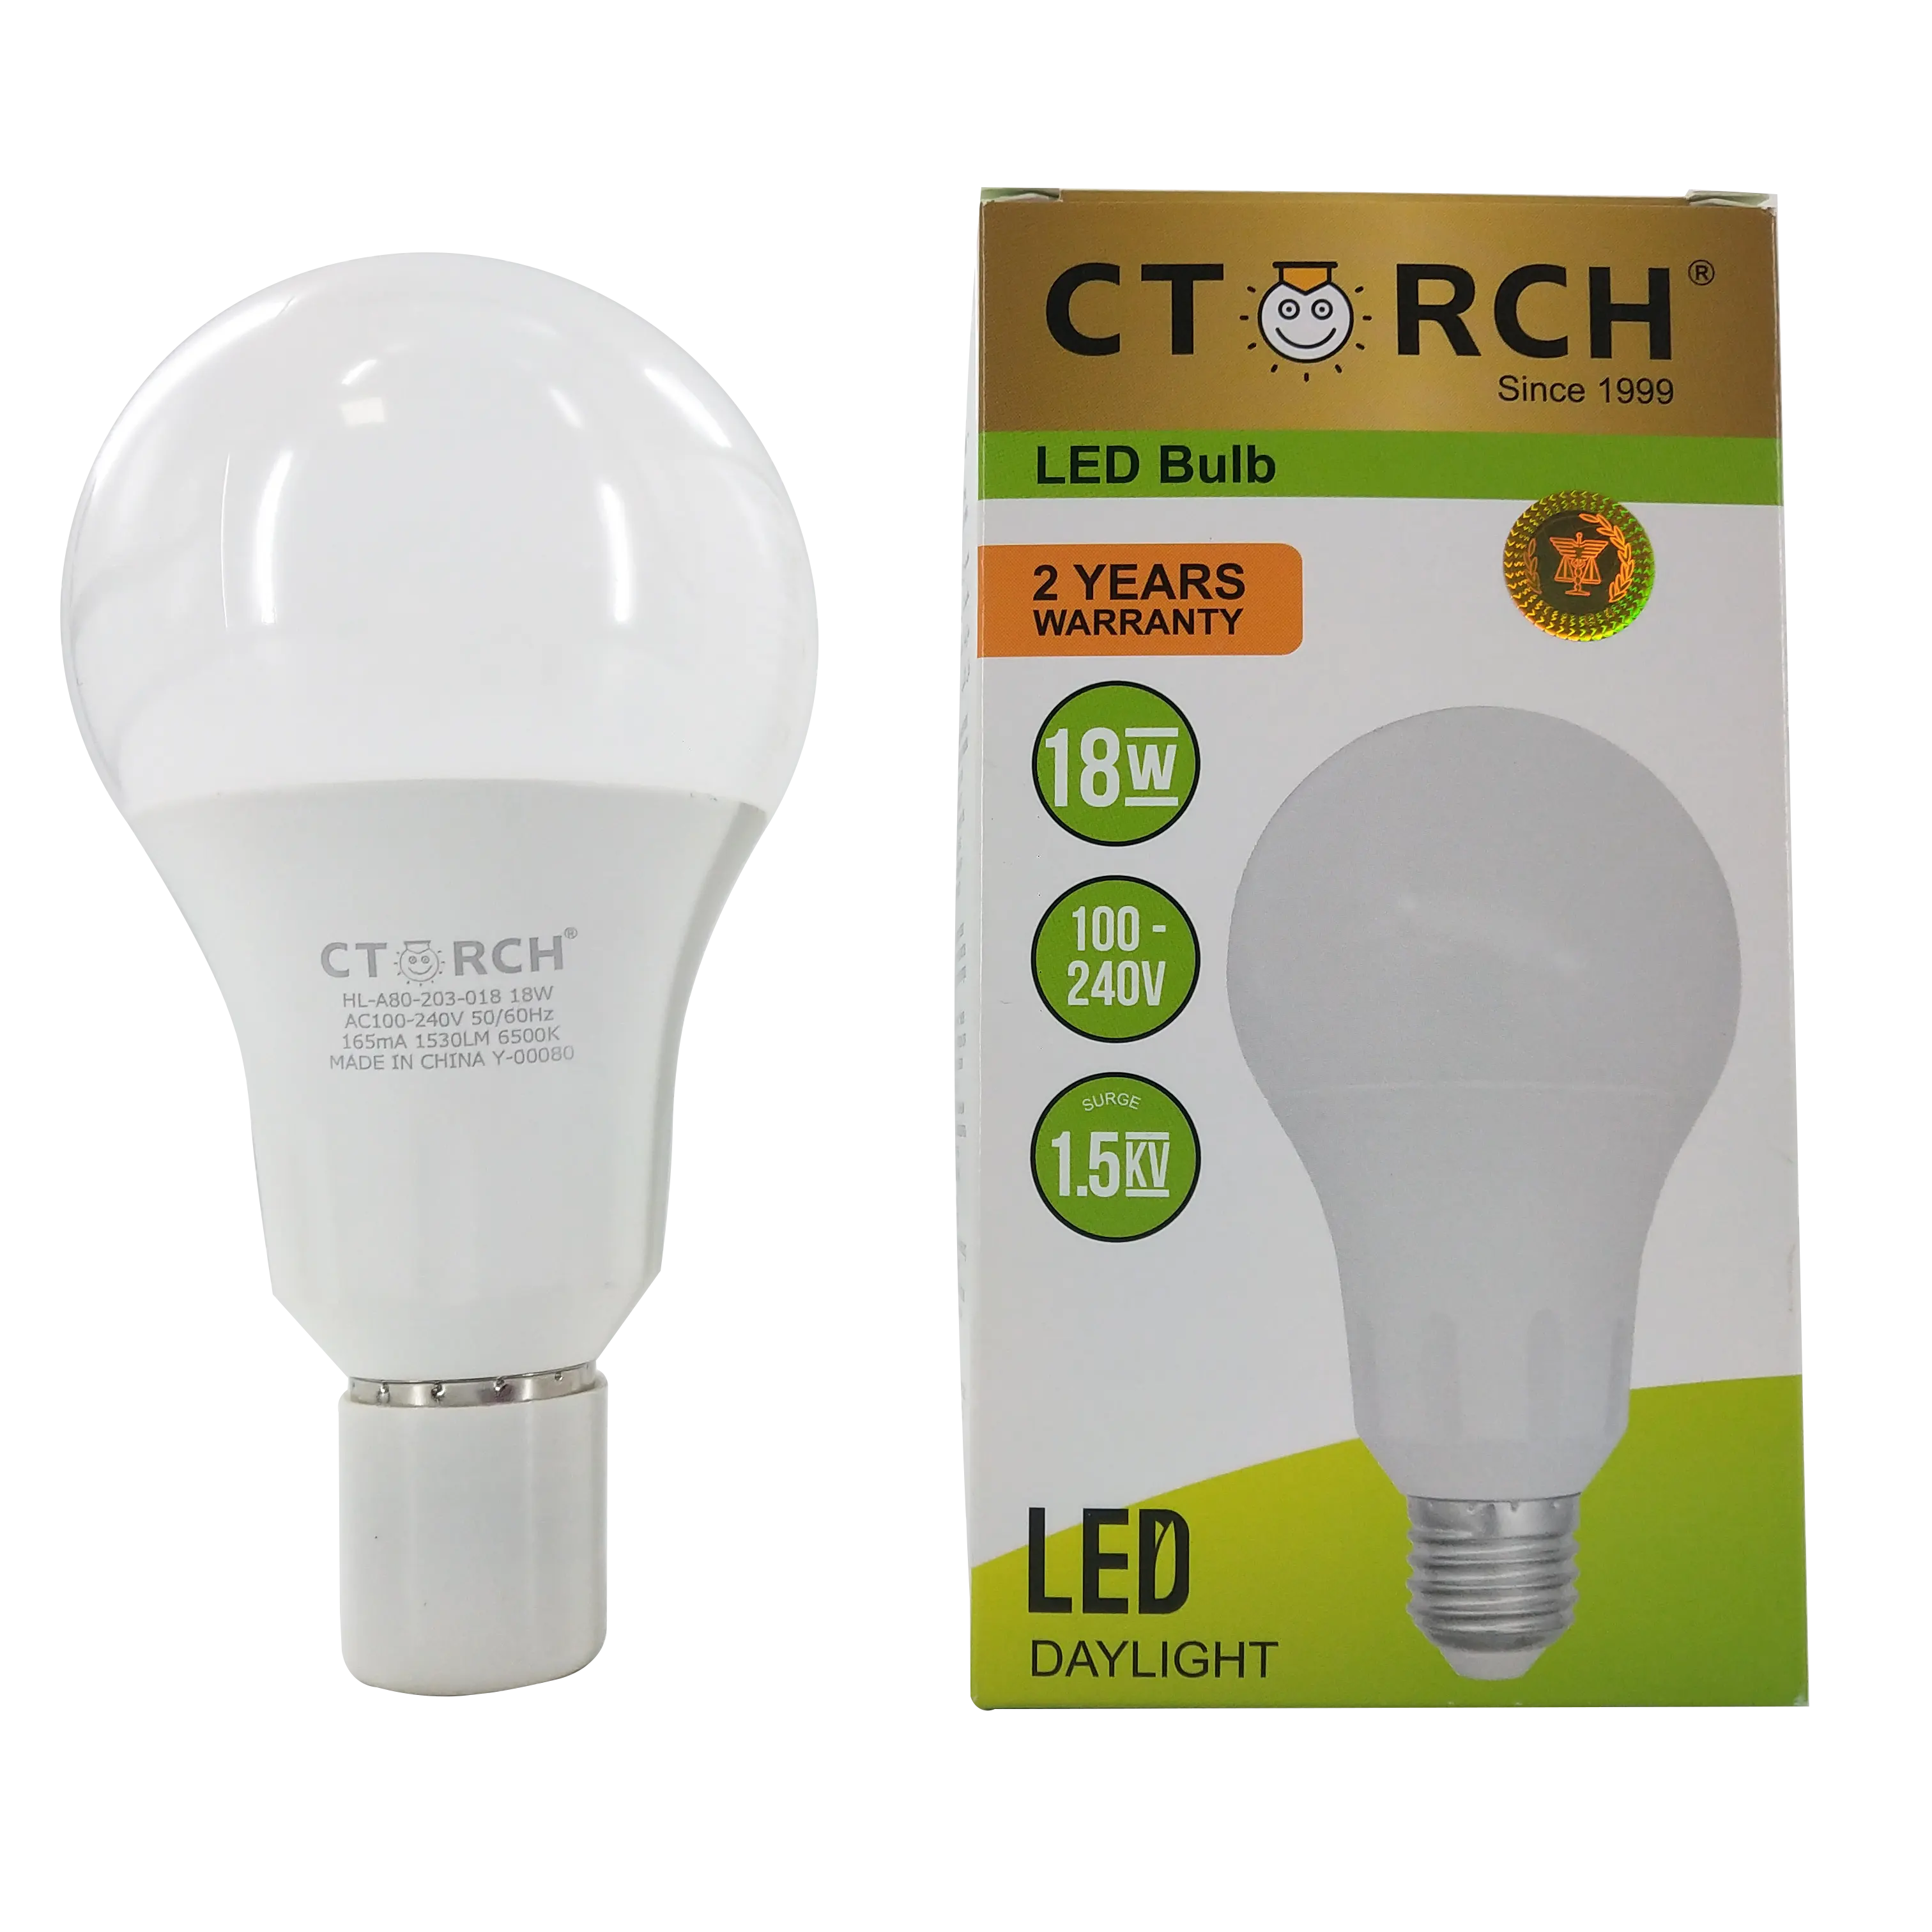 CTORCH Fashion Dob Model E27 B22 Led Bulb Light 8w 10w 12w 15w 18w led bulb light A60 A70 High Lumen Led A60 Light Bulb